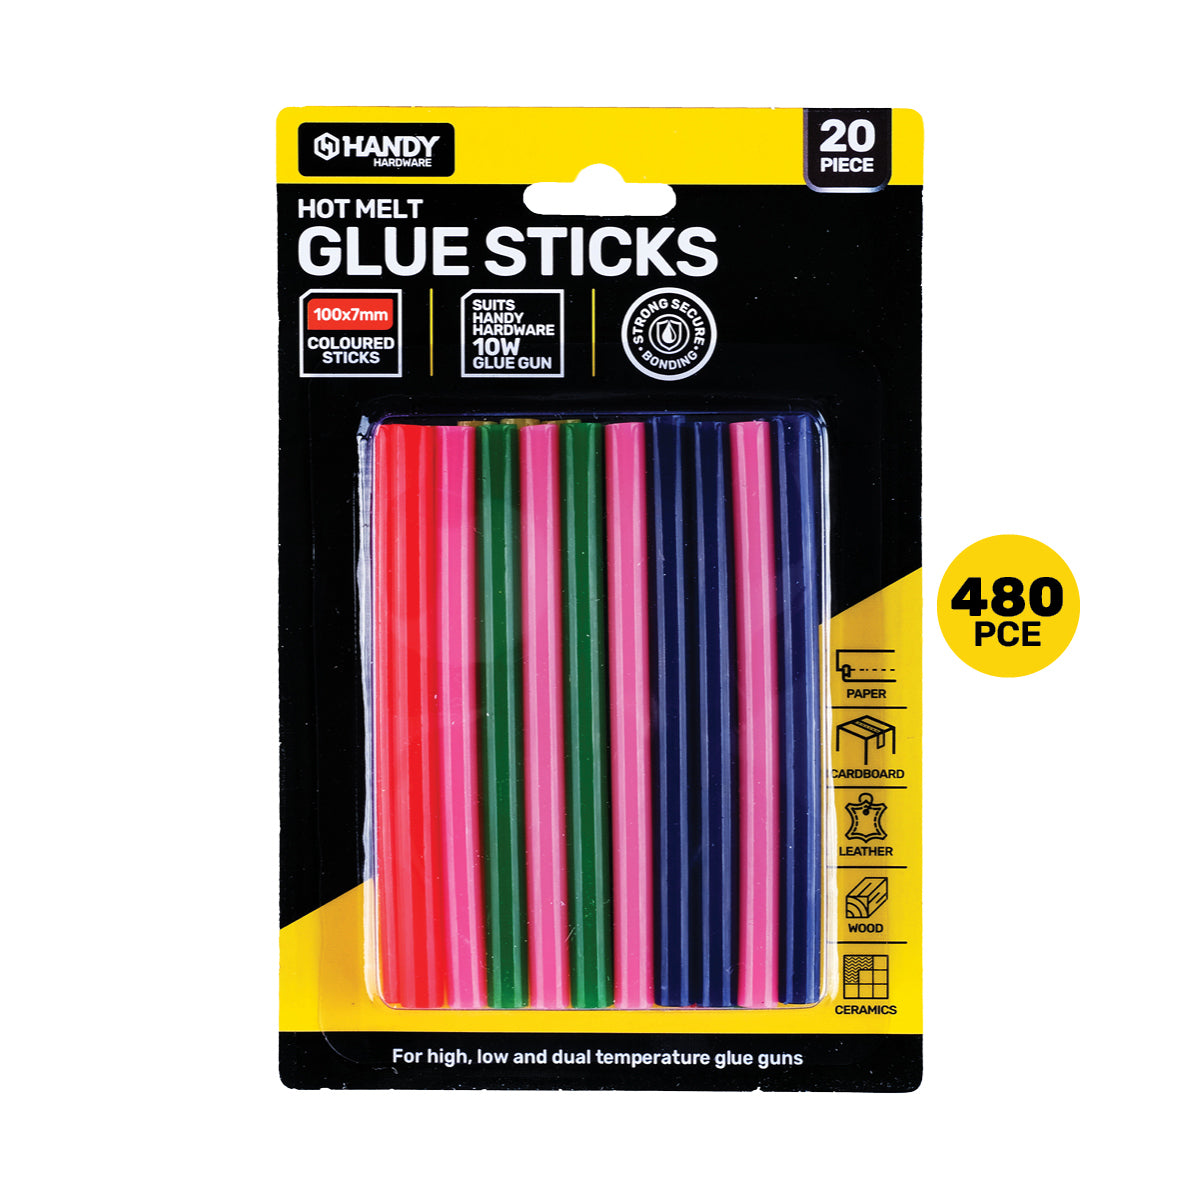 Handy Hardware 480PCE Coloured Hot Melt Glue Sticks Vibrant Colours 100 x 7mm